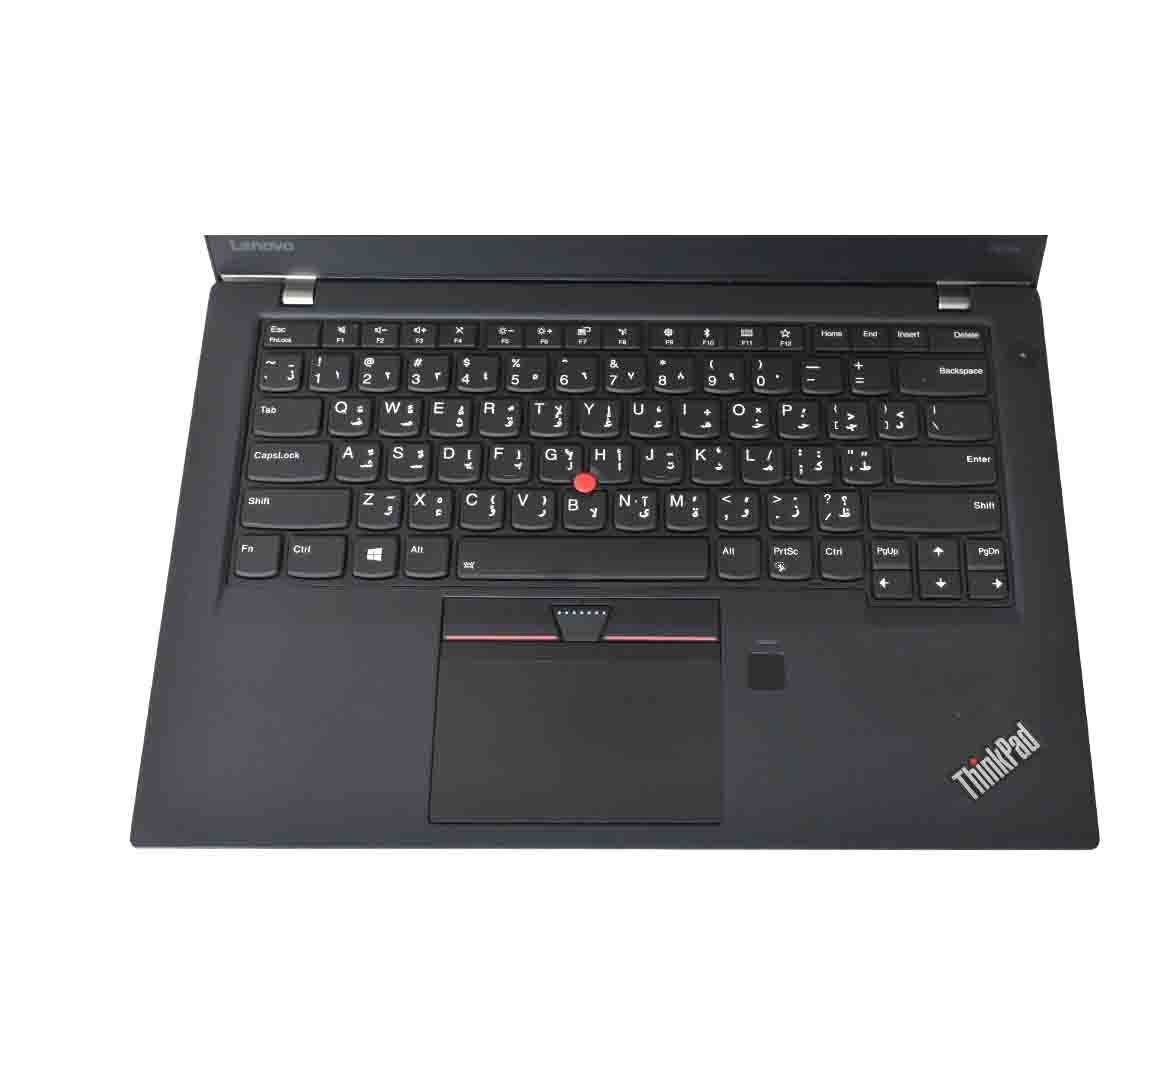 Lenovo ThinkPad T470s Business Laptop, Intel Core i7-6th Gen. CPU, 16GB RAM, 256GB SSD, 14 inch Touchscreen, Windows 10, Refurbished Laptop